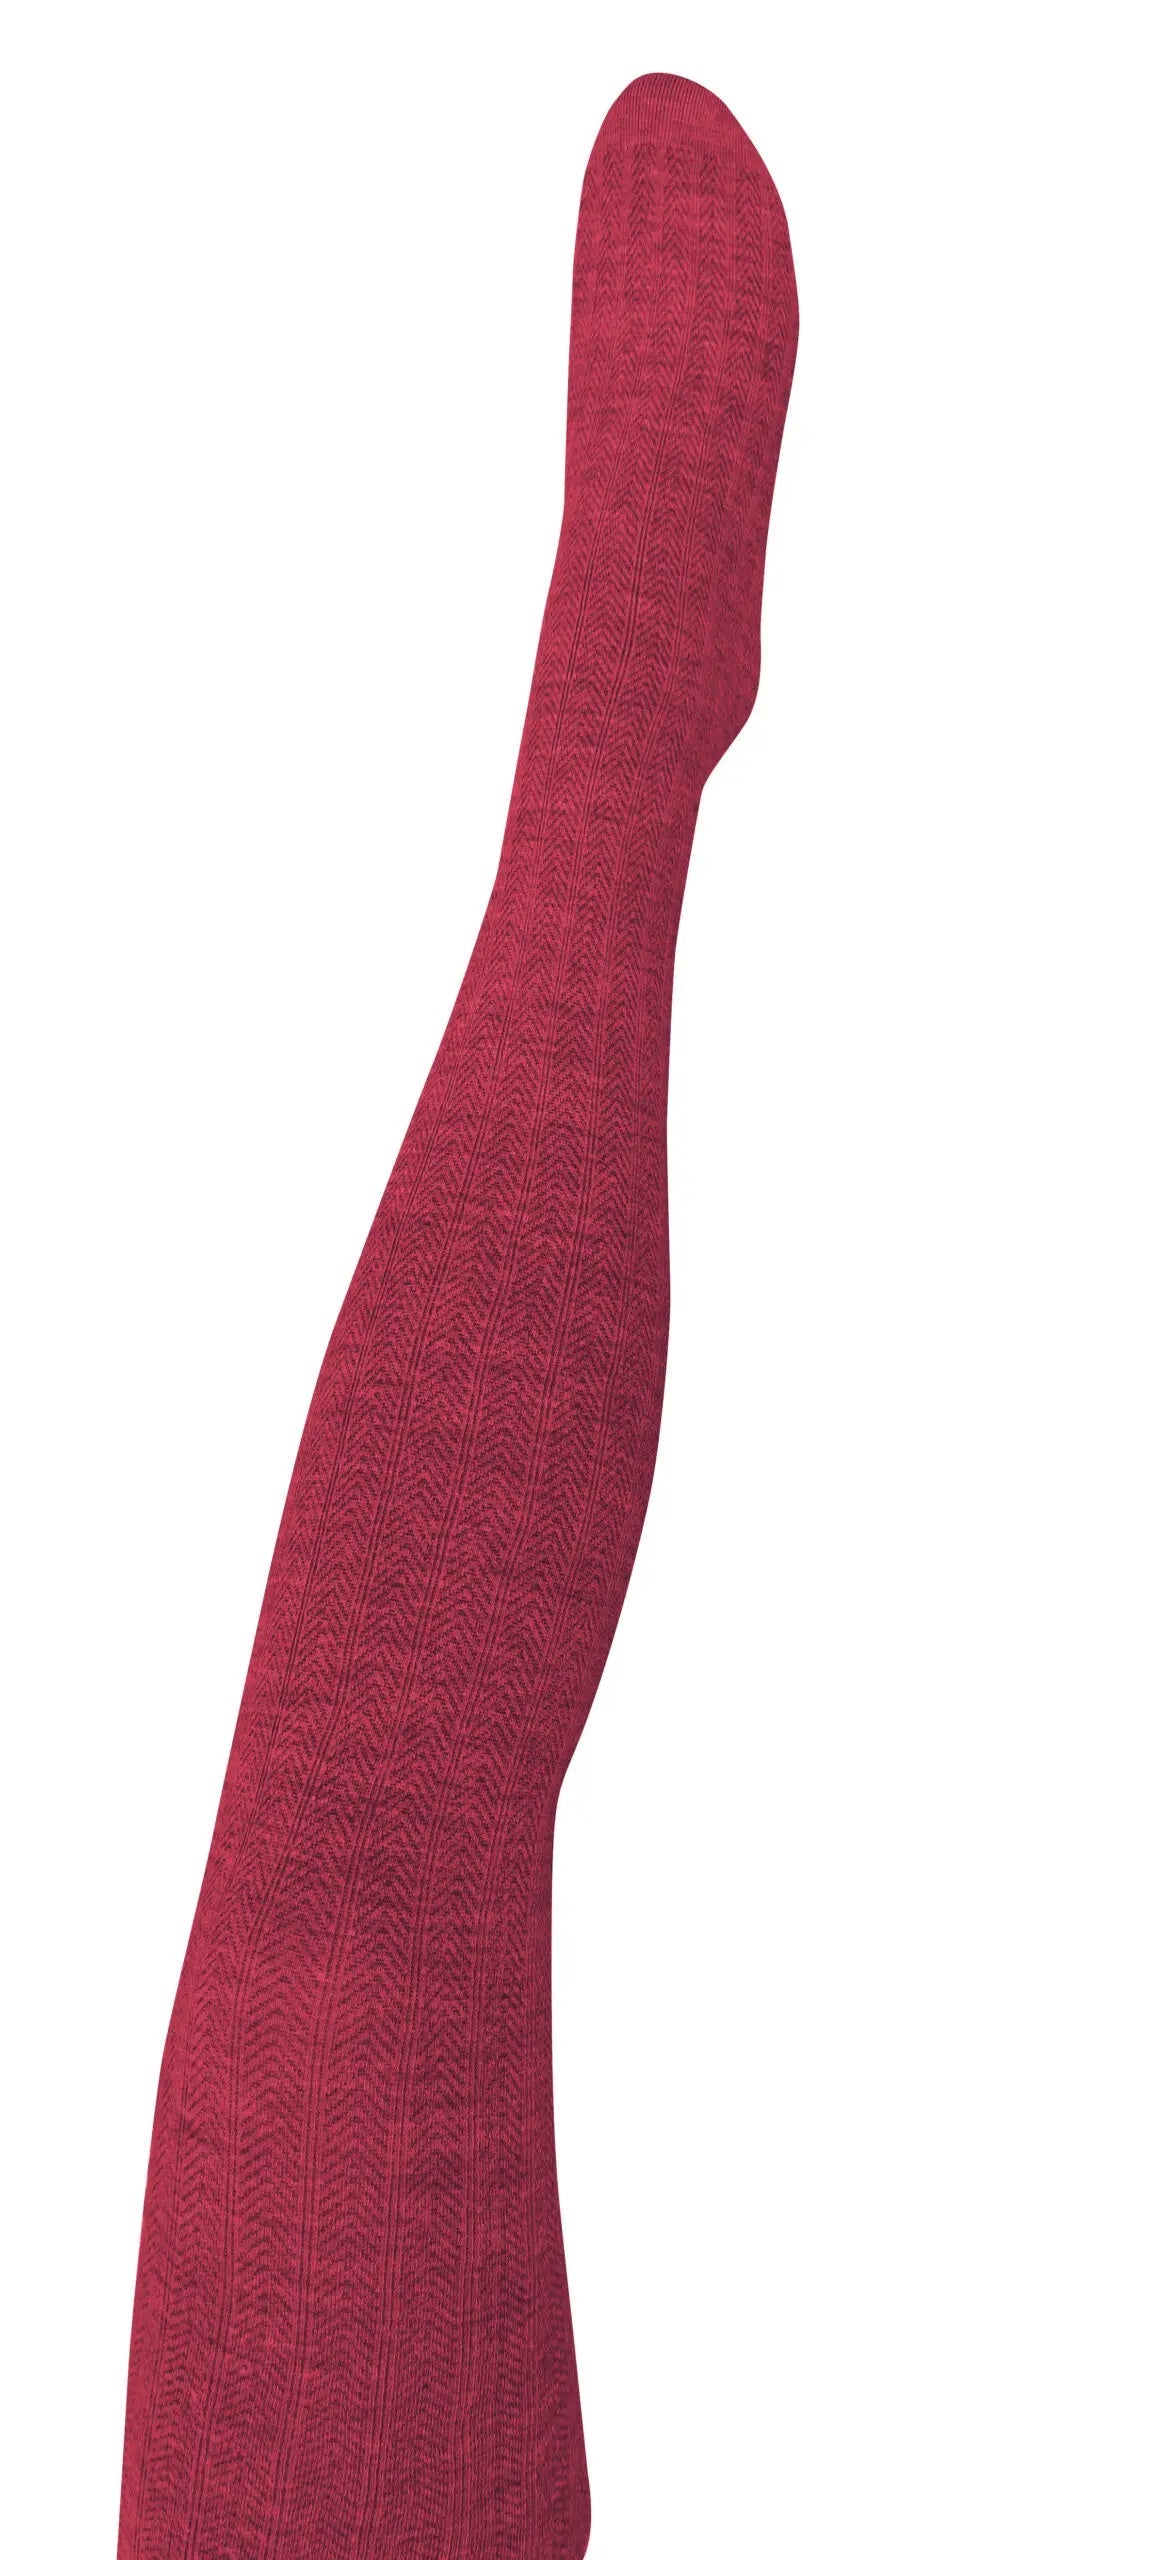 ‘Martini’ Merino Wool Tights - Tightology Tights Tightology Crimson Small/Medium 